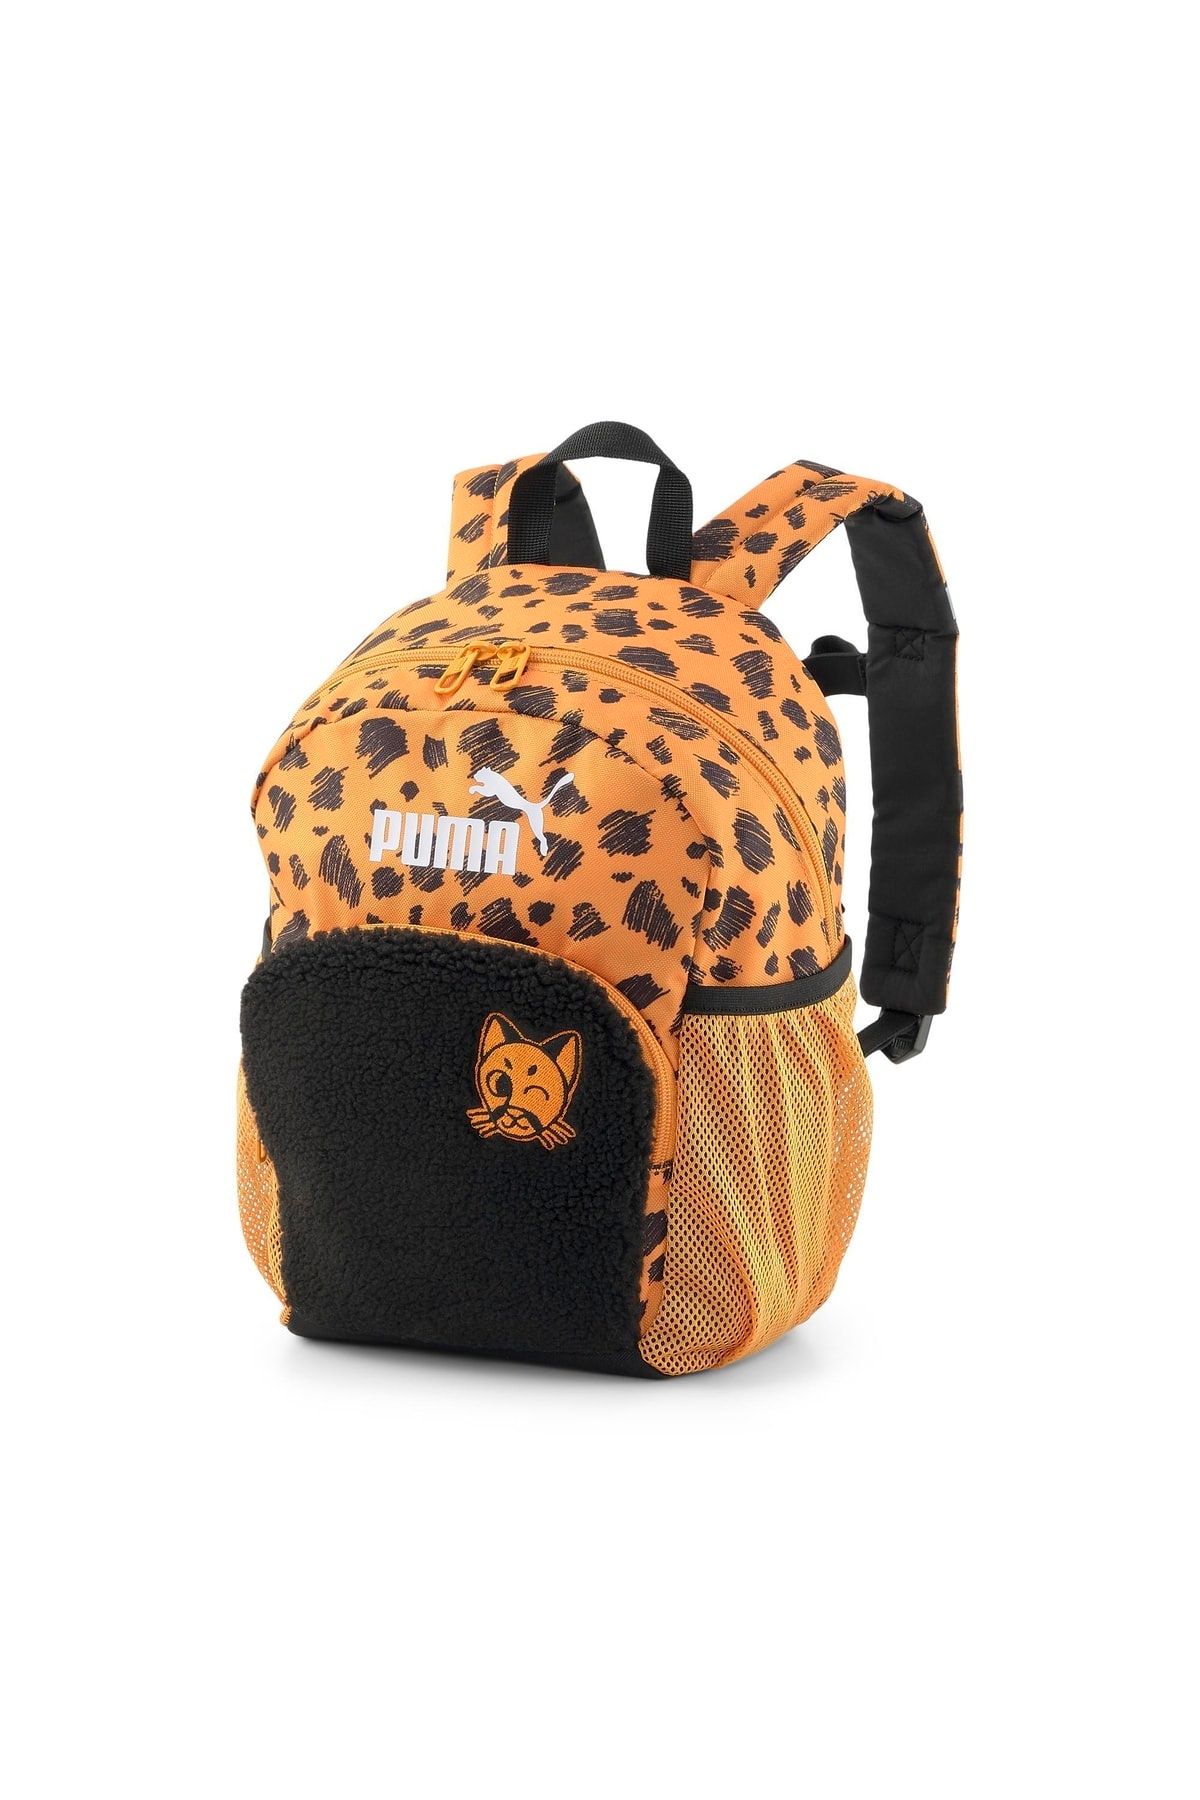 Puma PU MATE Backpack Desert Clay - Desenli Çocuk Sırt Çantası